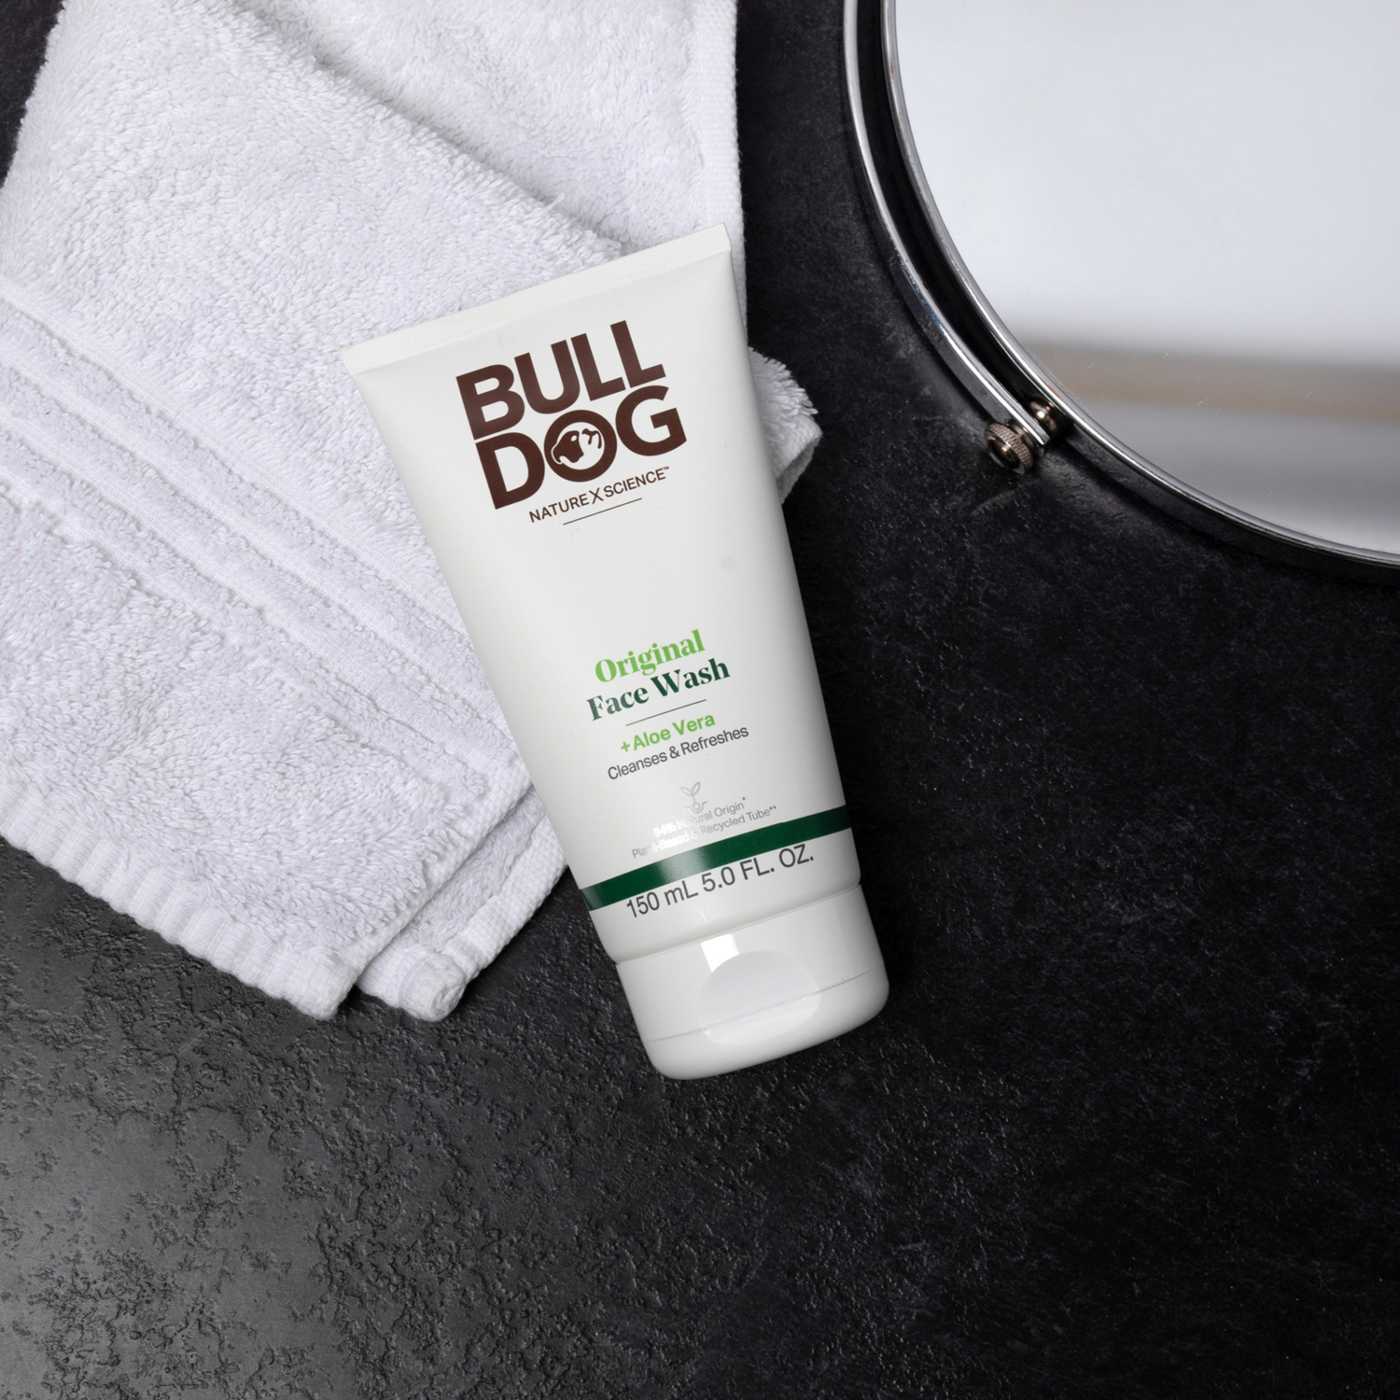 Bulldog Skincare for Men Face Wash - Original; image 3 of 7